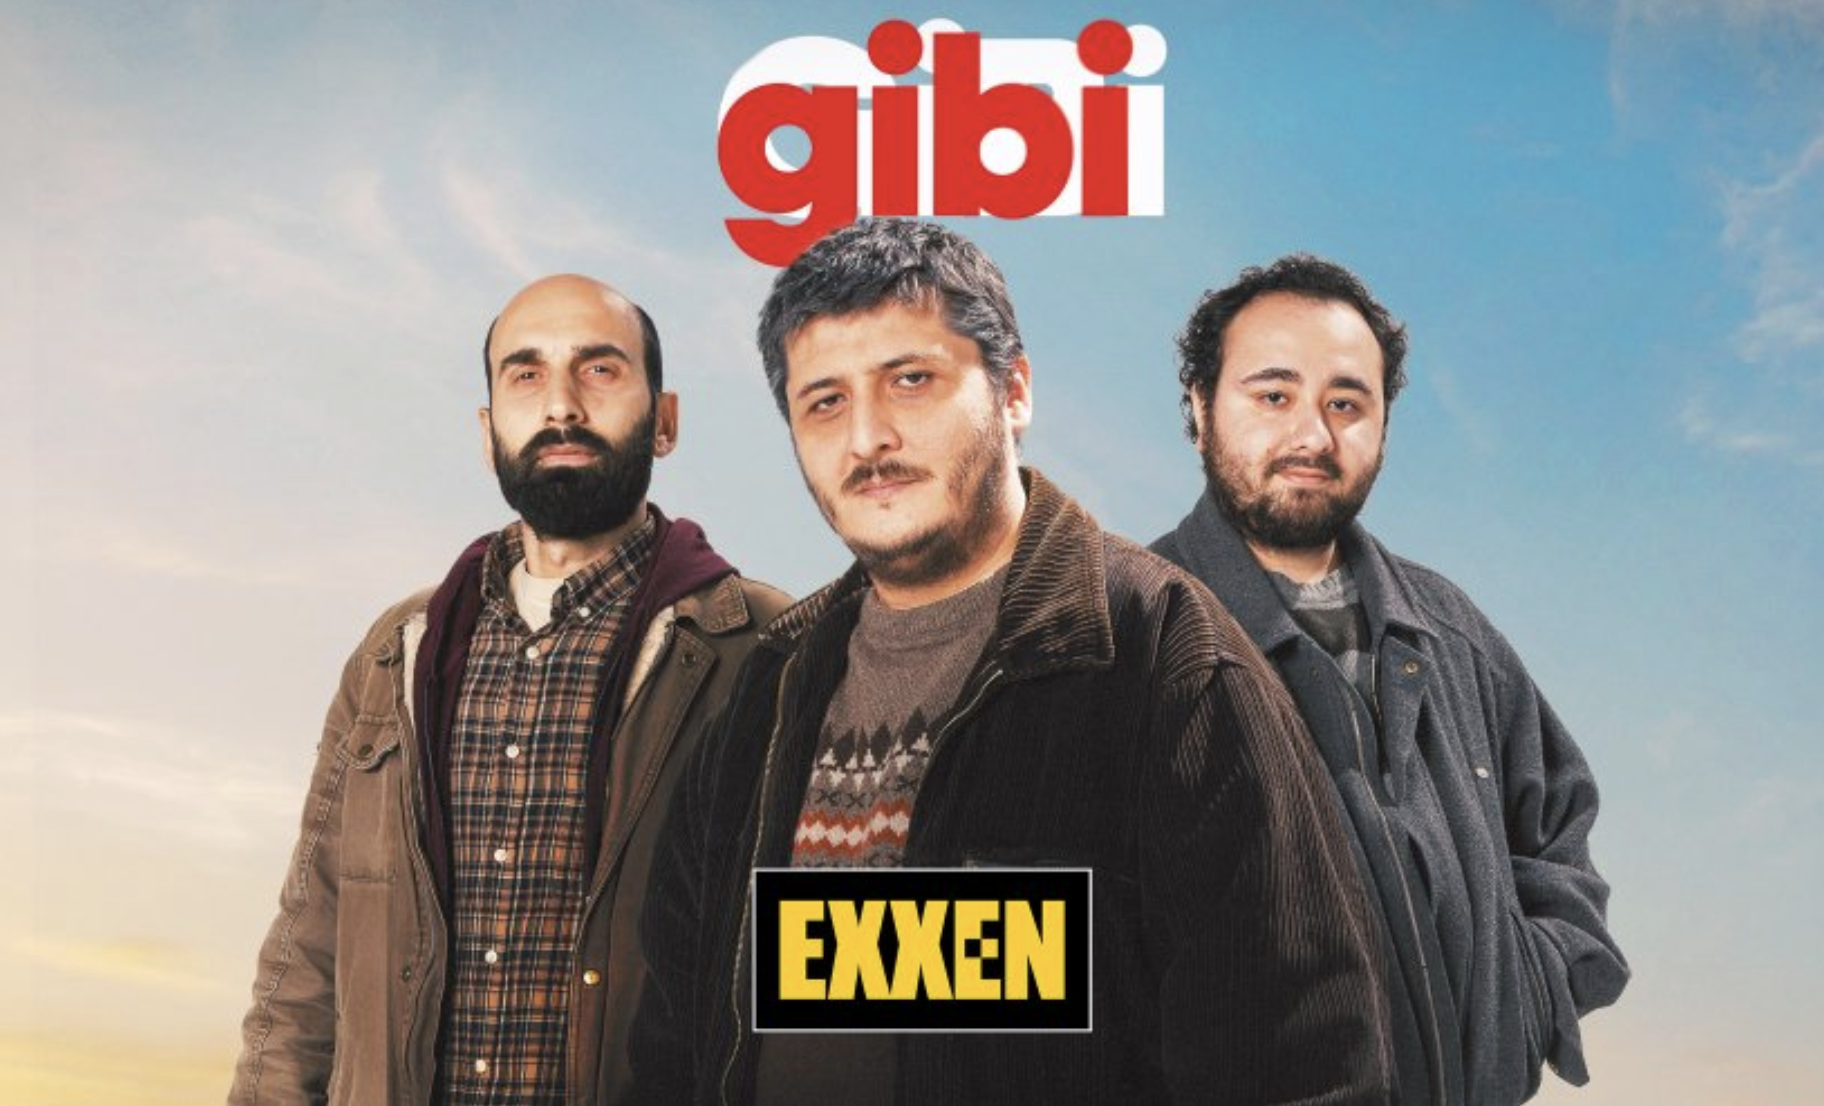 Gibi (Exxen)